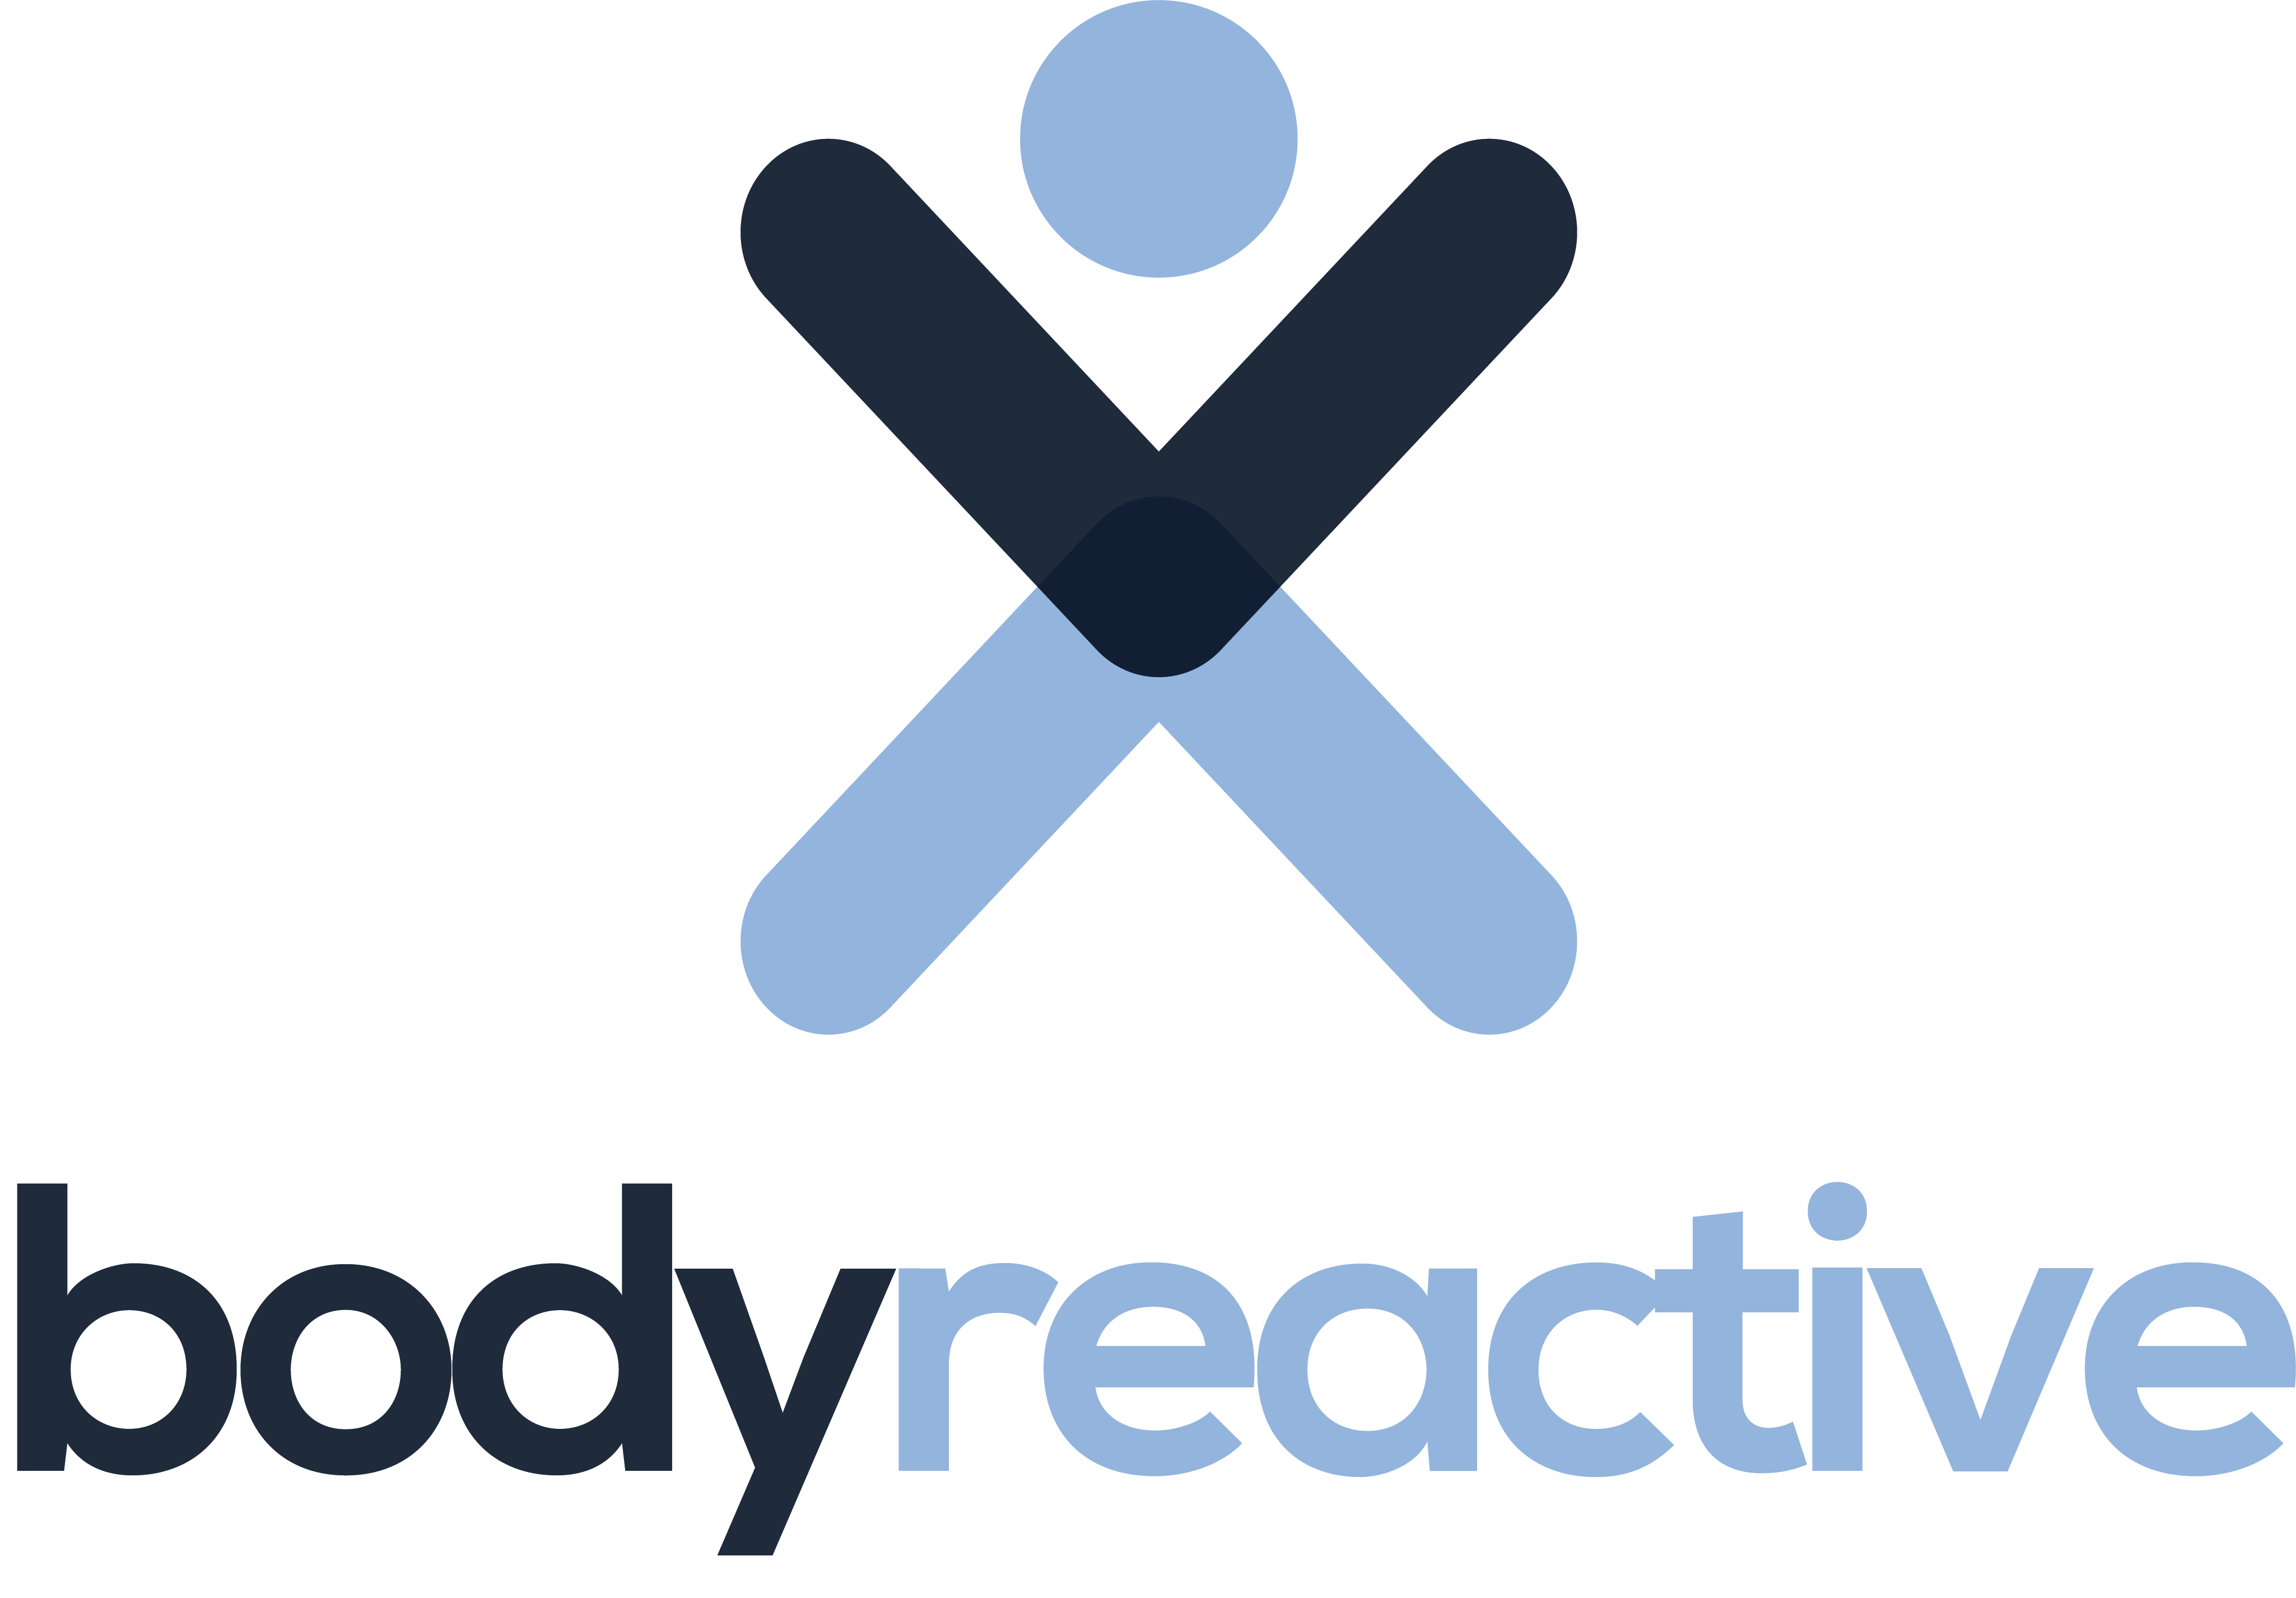 Bodyreactive company logo